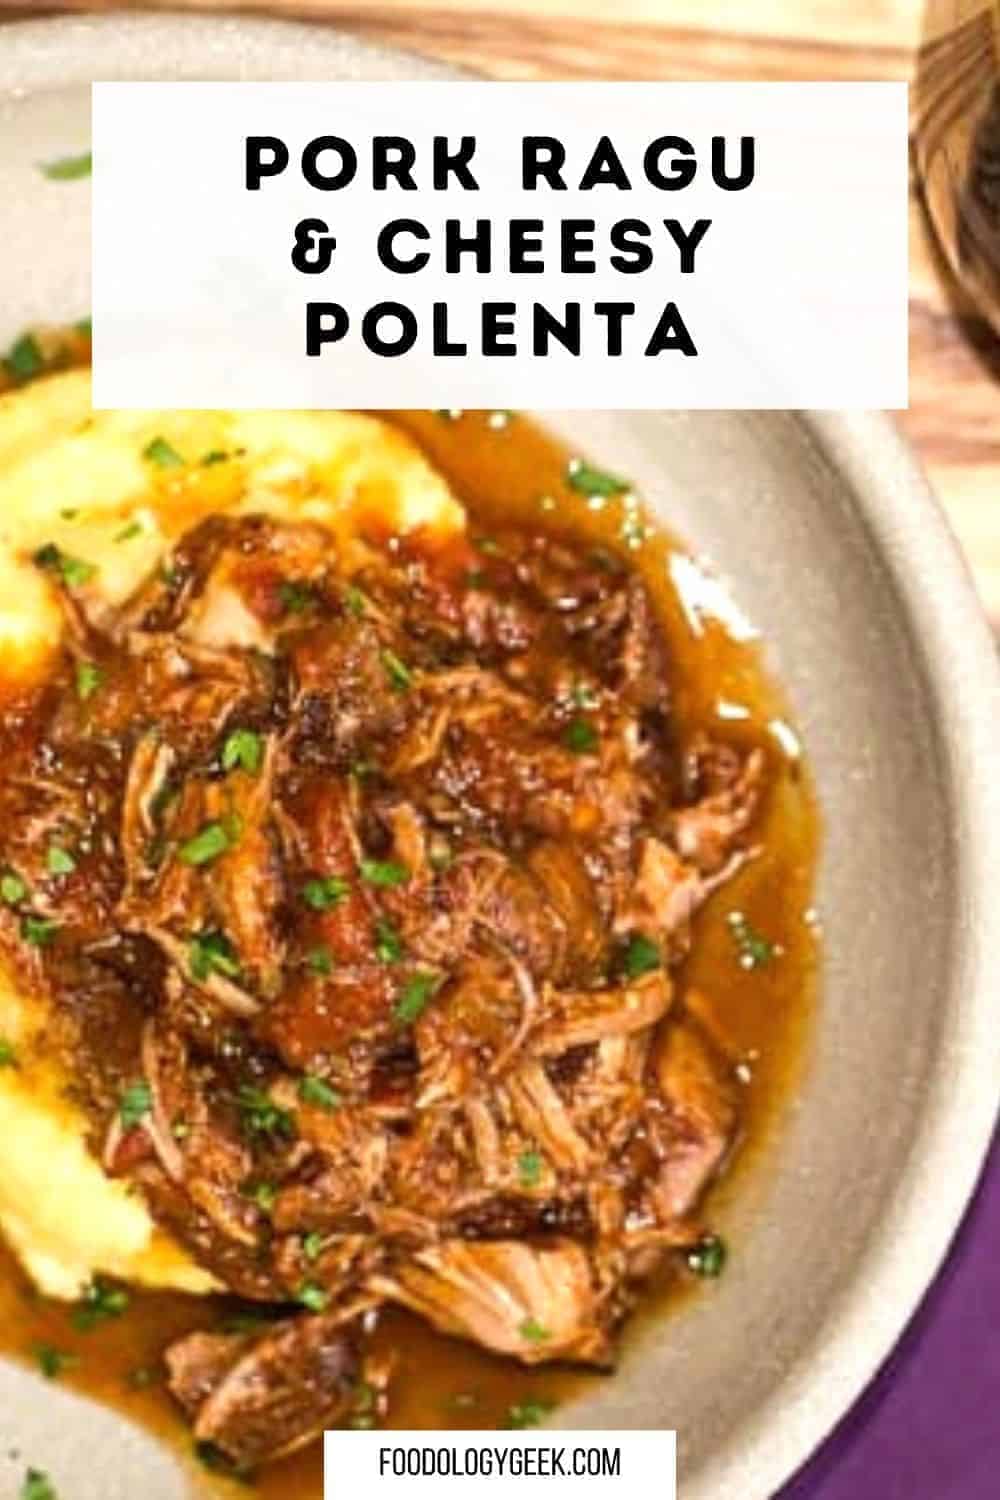 pork ragu and polenta served with italian wine